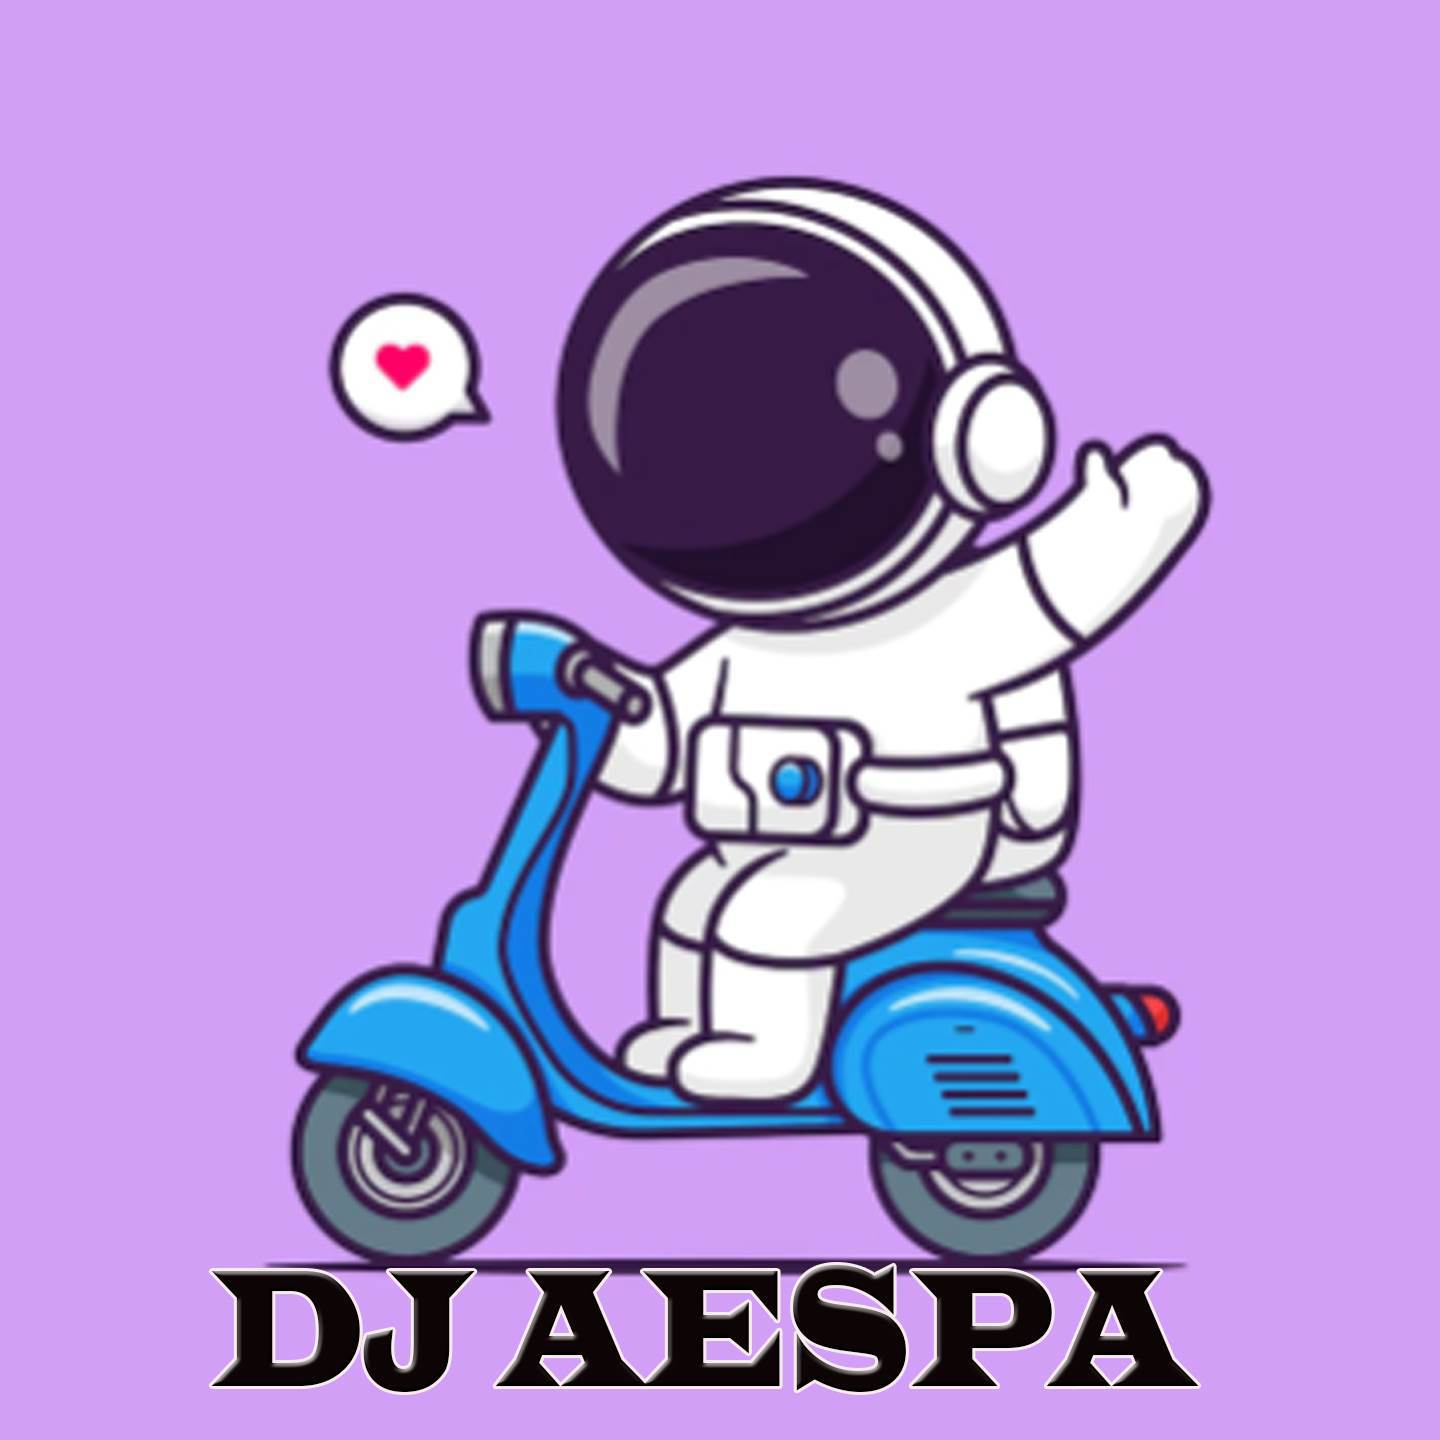 DJ AESPA - DJ IM coming home